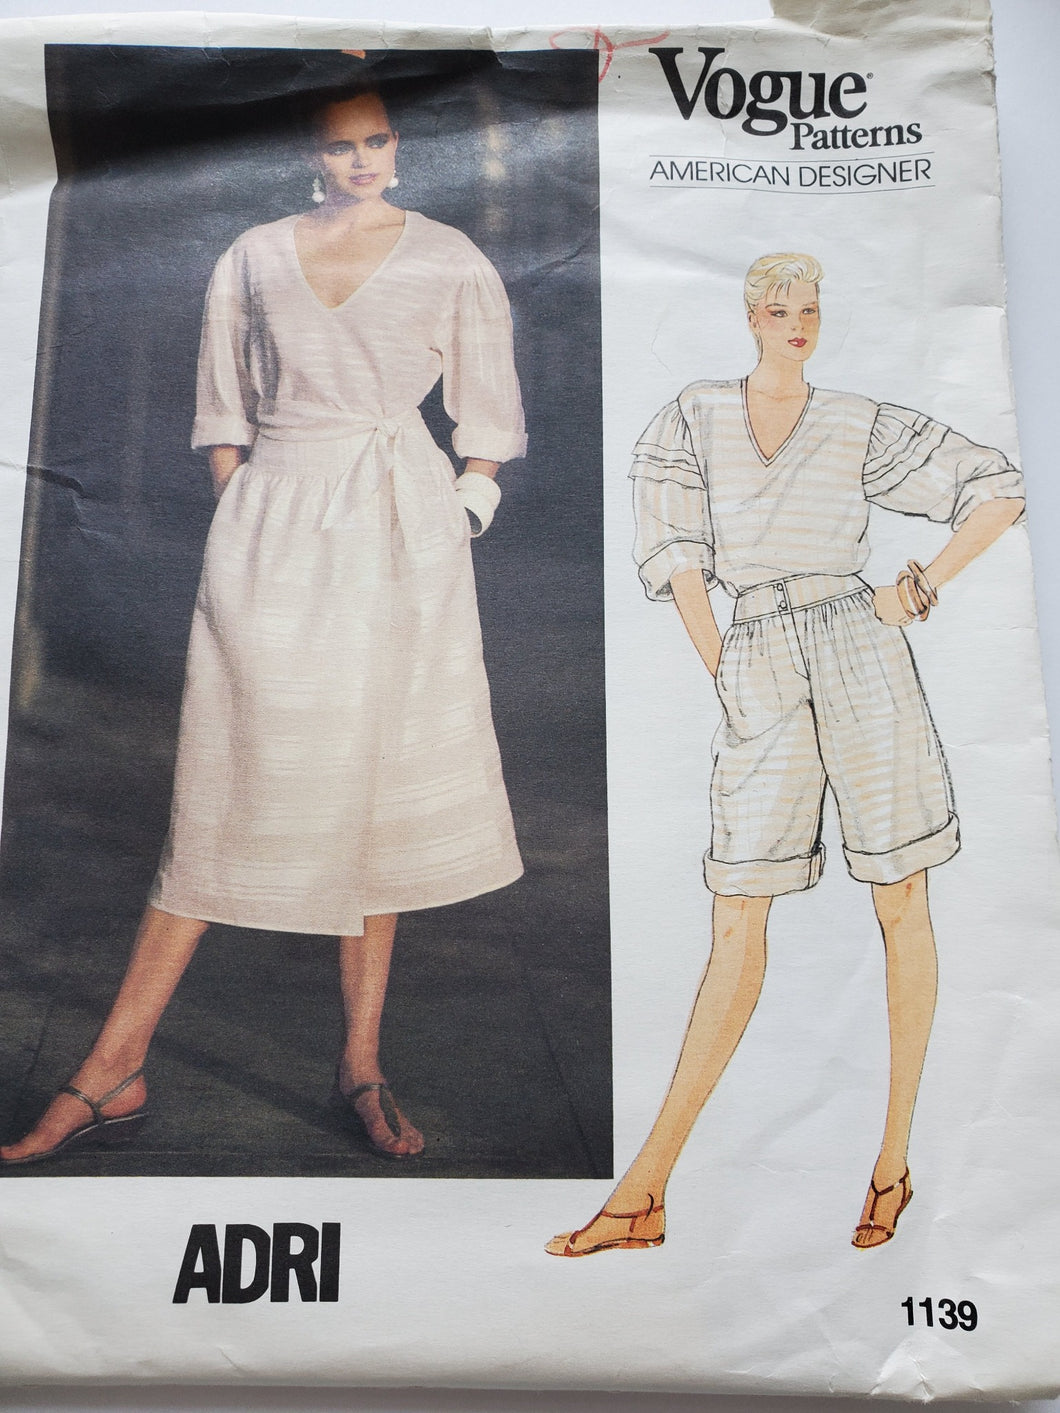 Vogue Pattern 1139, UNCUT, American Designer ADRI, Skirt, Top and Shorts Size 6-8-10, Rare